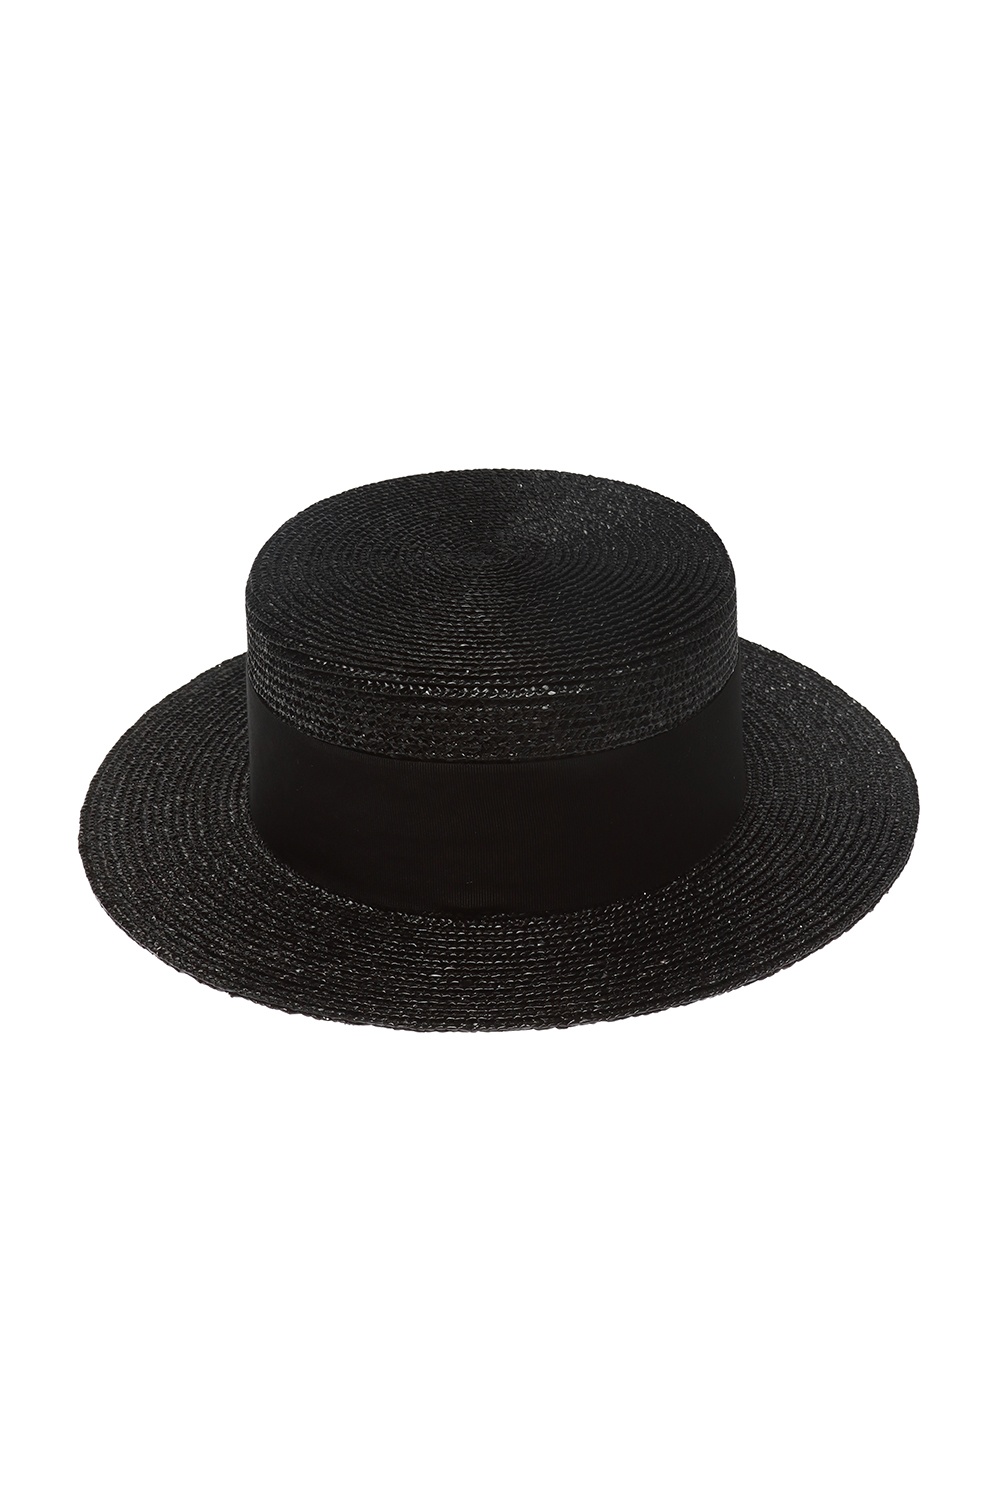 Saint Laurent Straw Hat